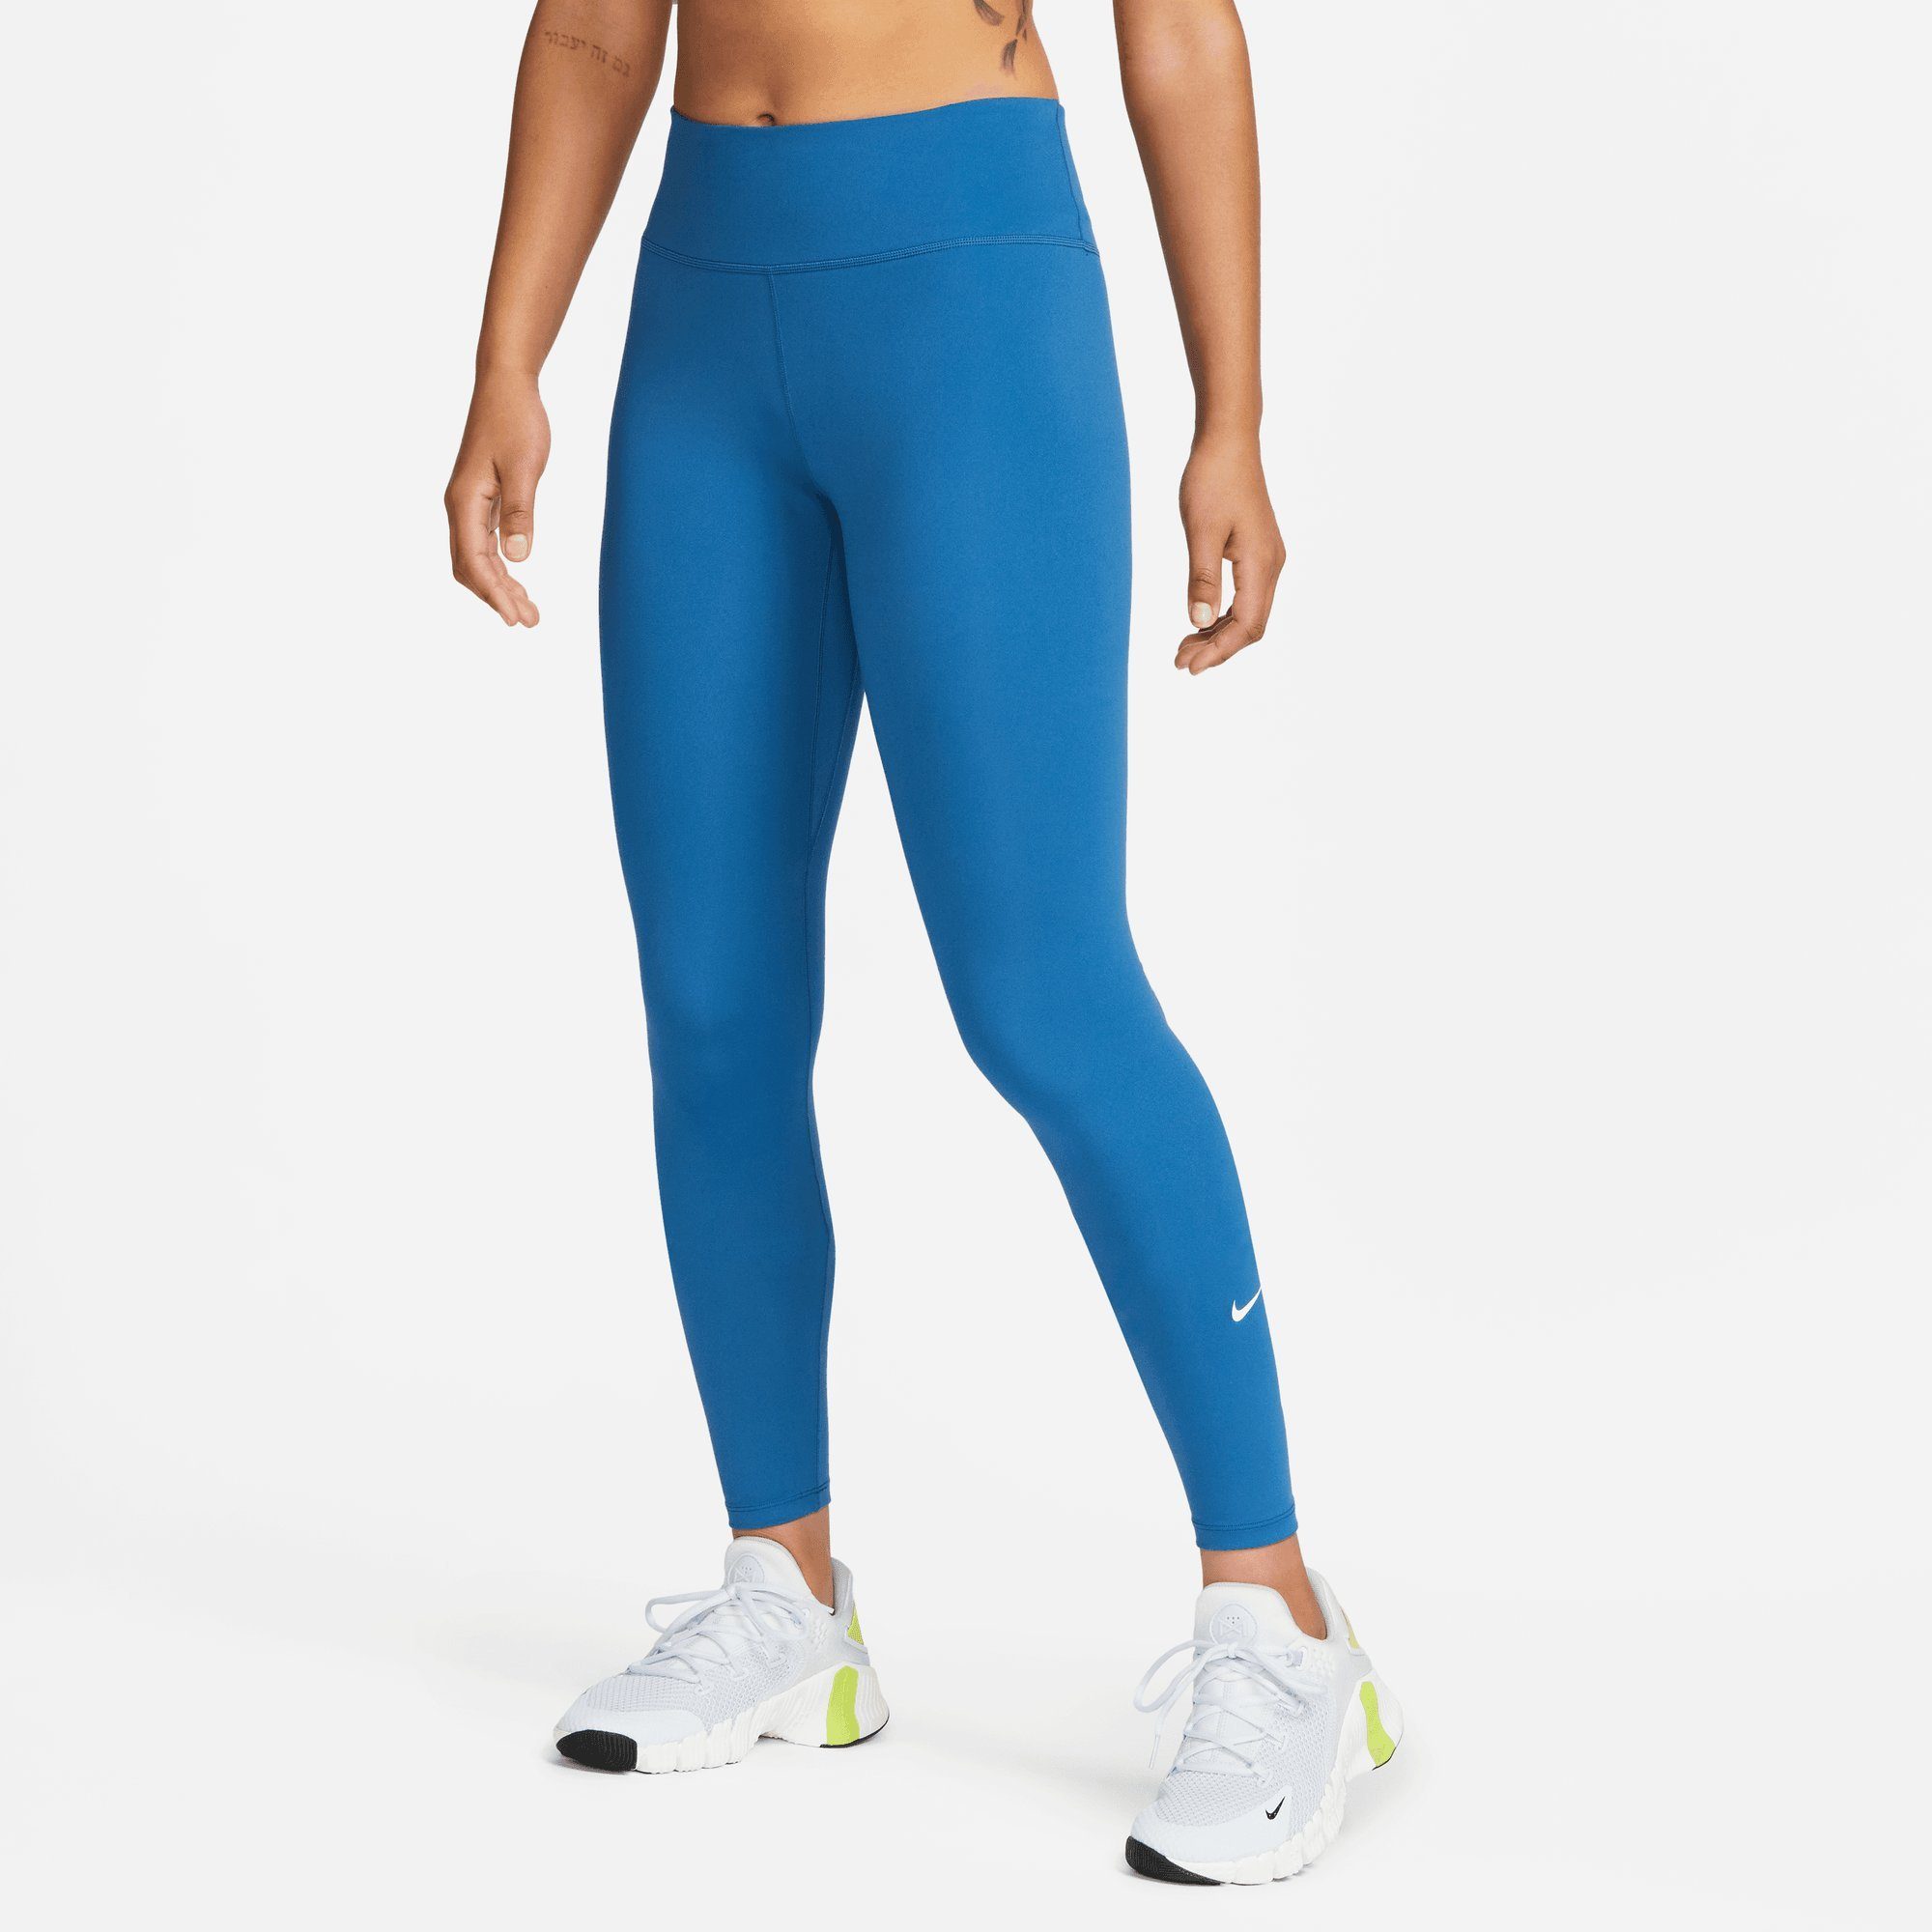 BLUE/WHITE INDUSTRIAL ONE Nike Trainingstights LEGGINGS MID-RISE WOMEN'S